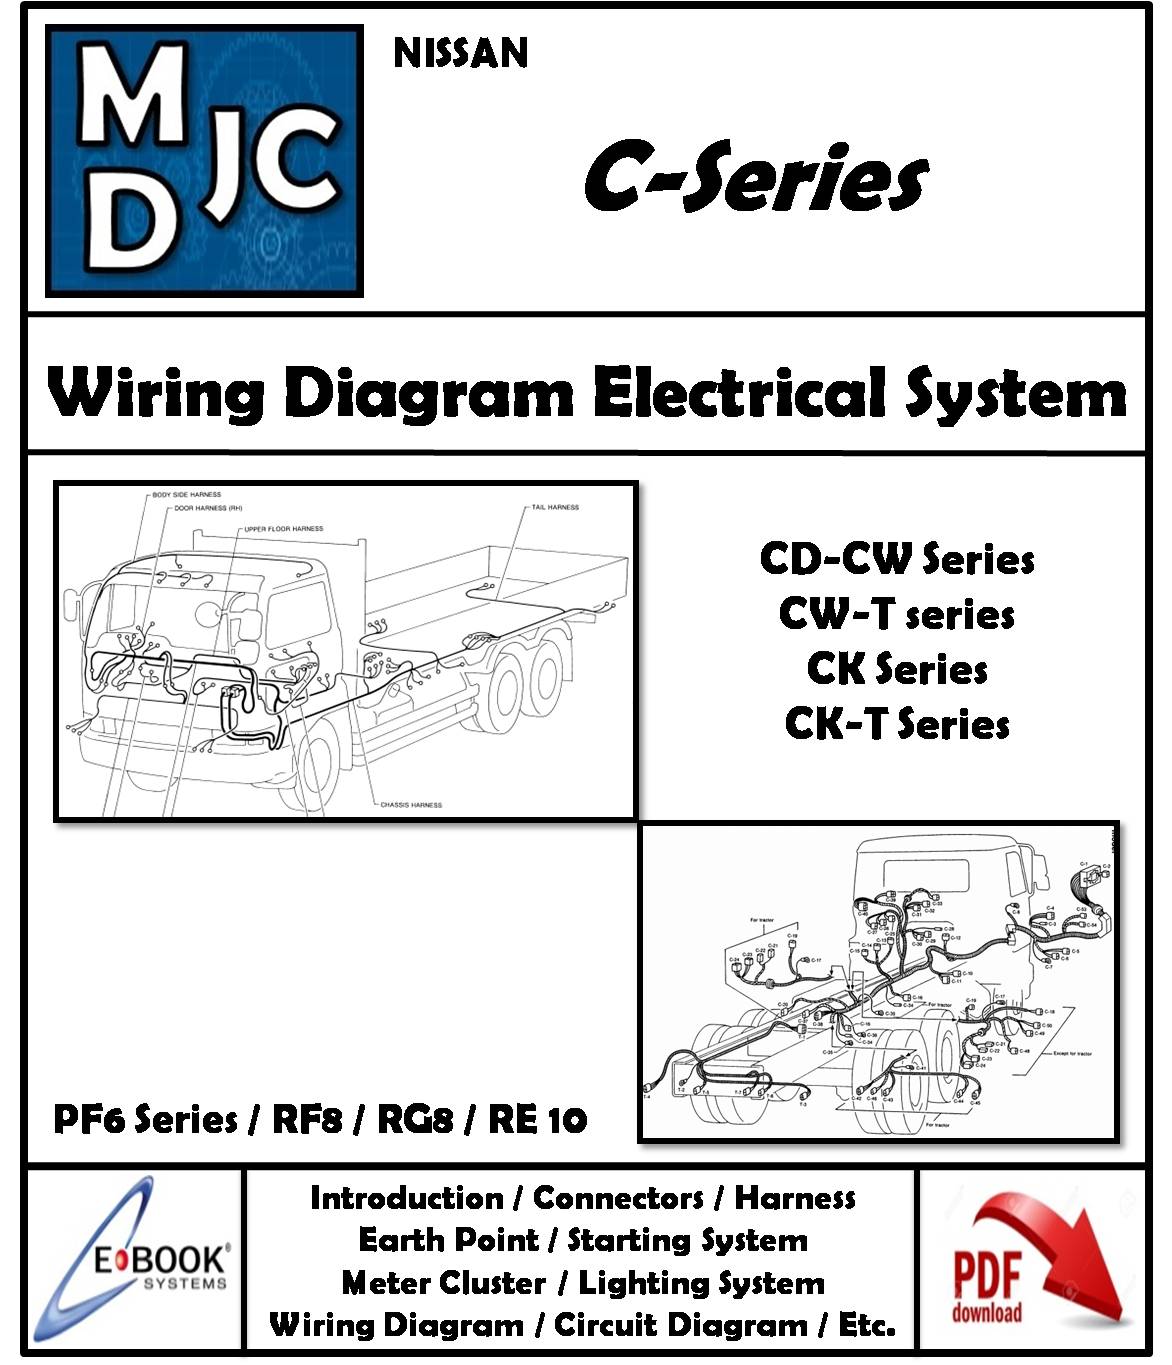 Nissan C-Series (CD-CW Series / CW-T series / CK Series / CK-T Series)